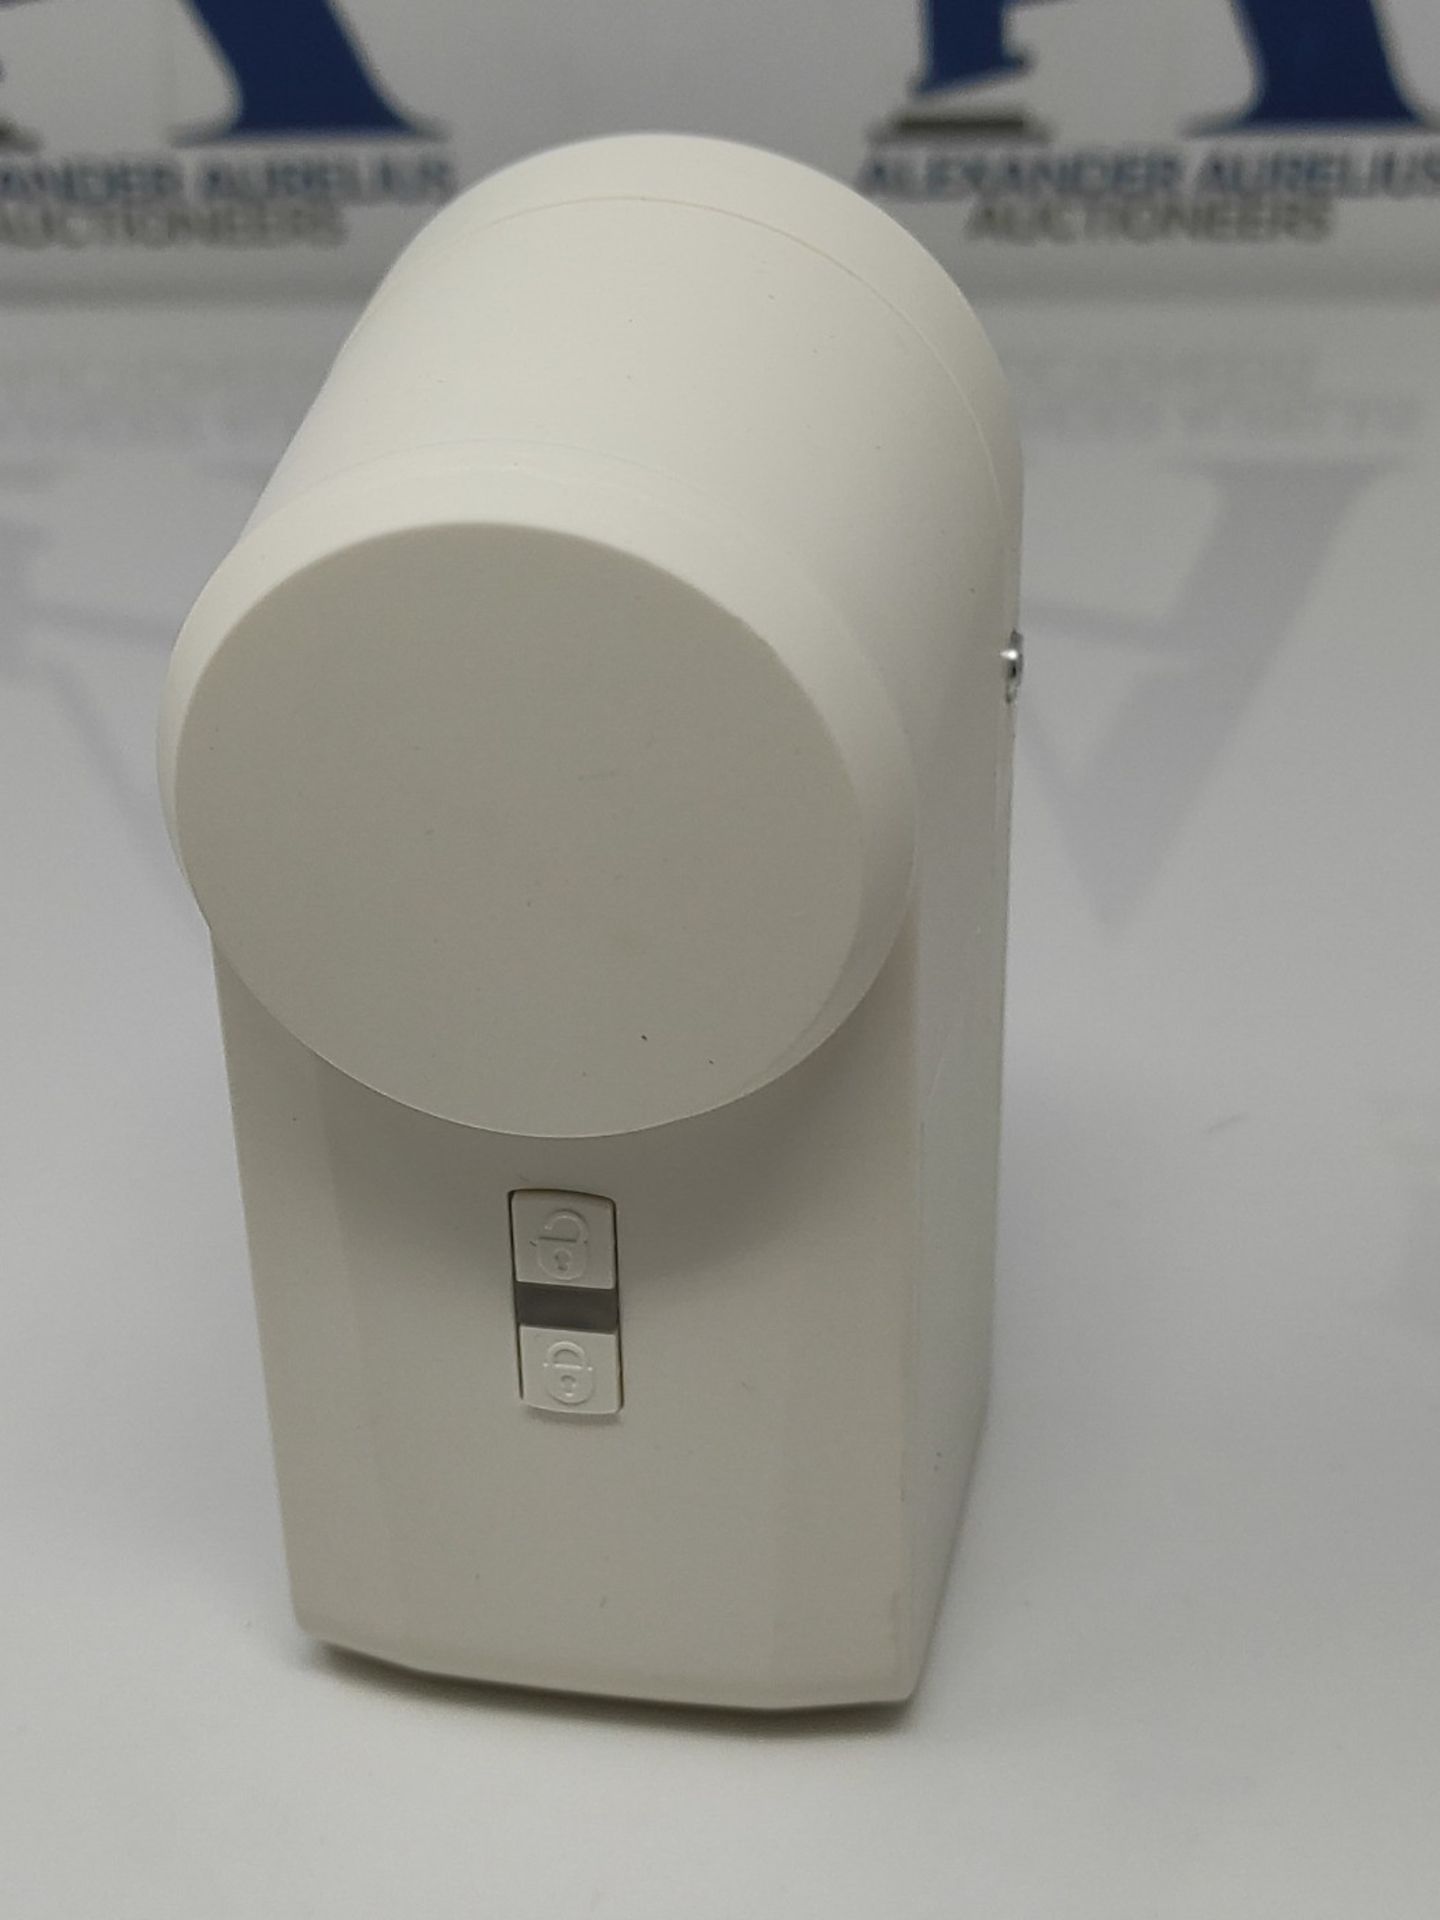 RRP £79.00 eqiva Bluetooth Smart Door Lock Drive, White, 142950A0, 5.6 x 5.2 x 11.4 cm - Image 3 of 3